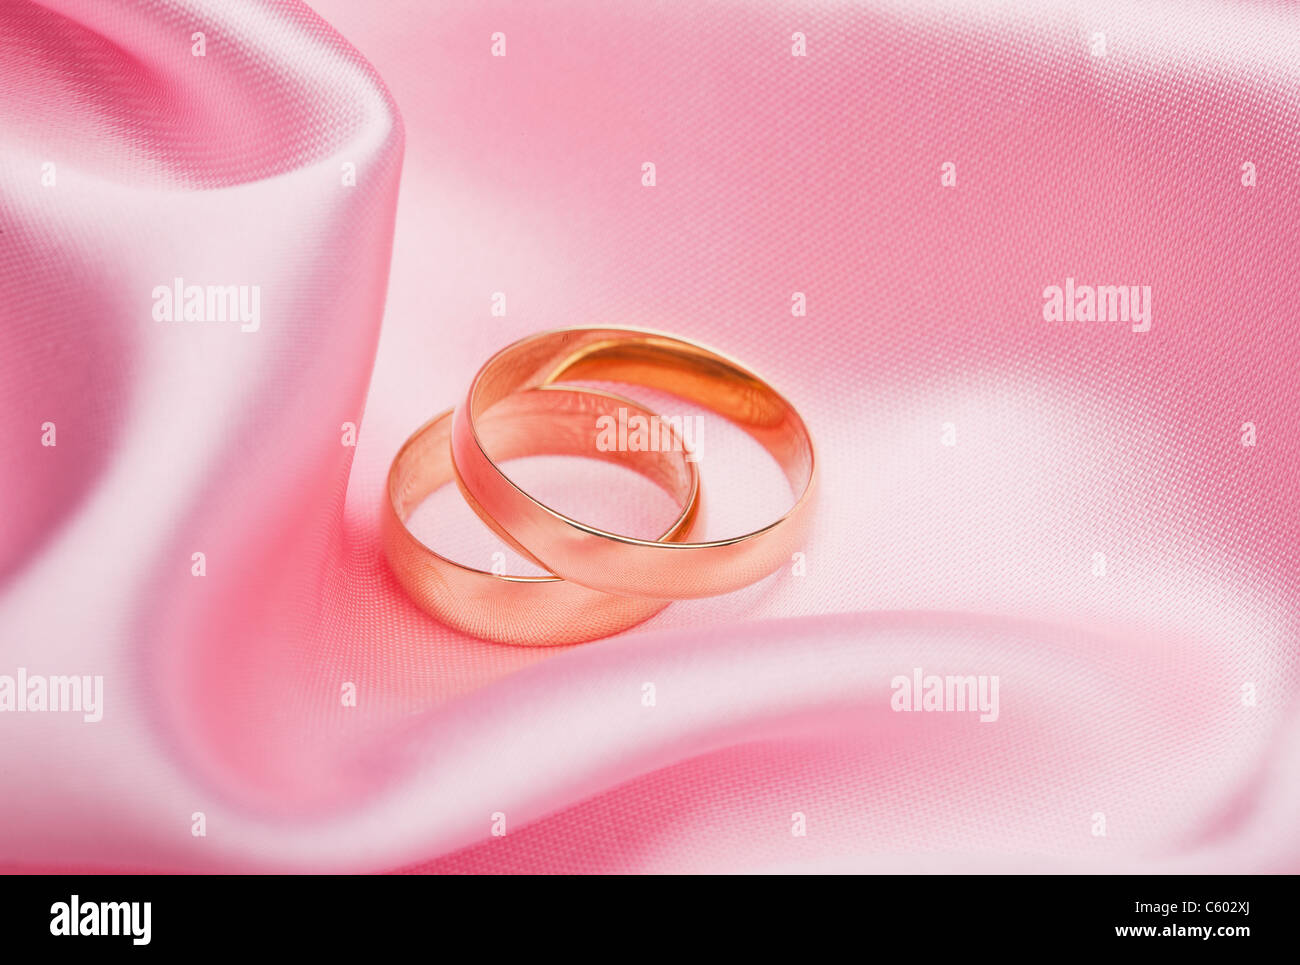 USA, Illinois, Metamora, Two wedding bands on pink silk Stock Photo